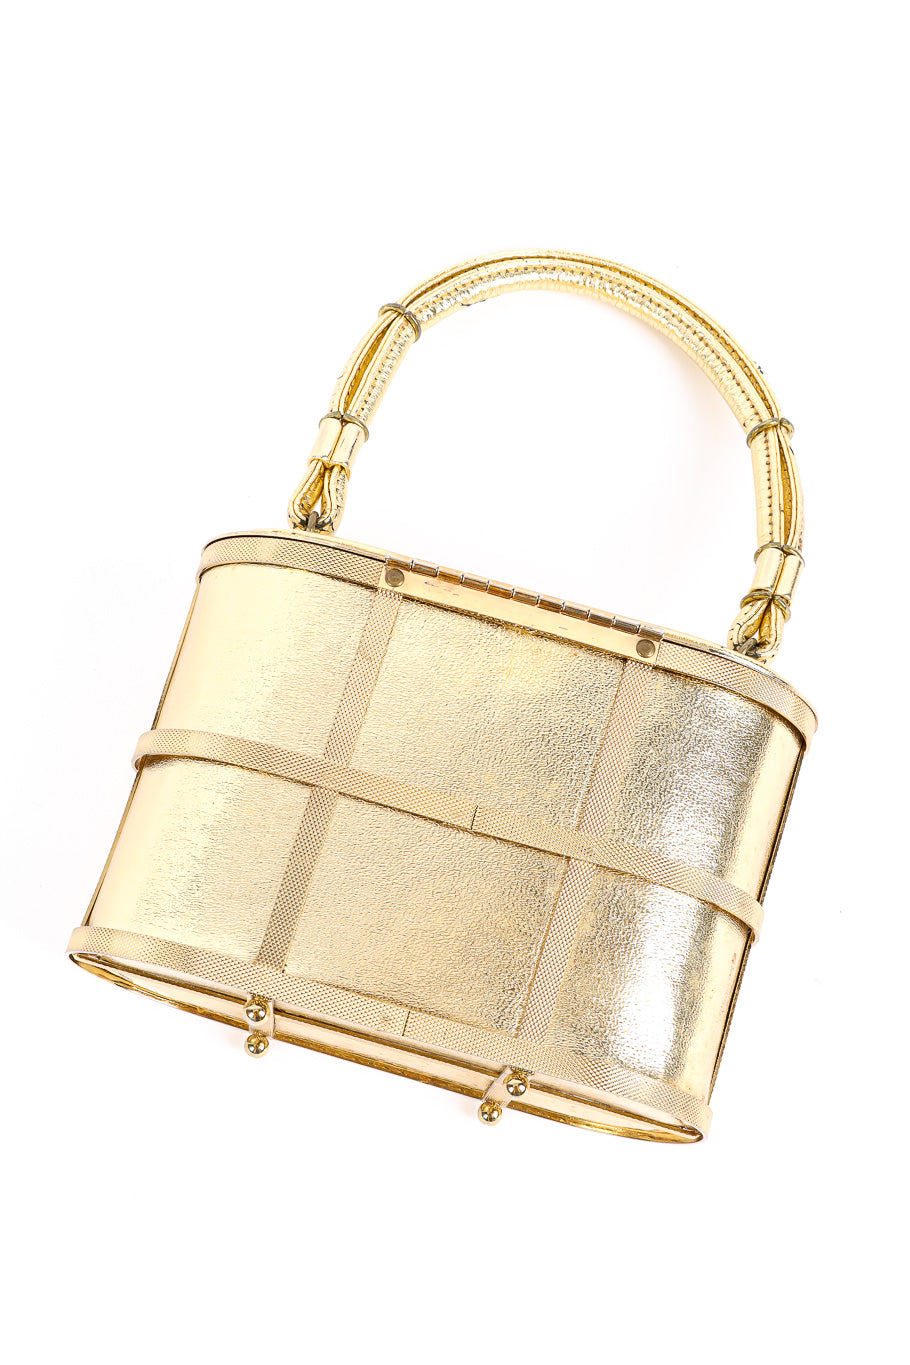 Etra metallic caged oval box bag backside product shot @recessla